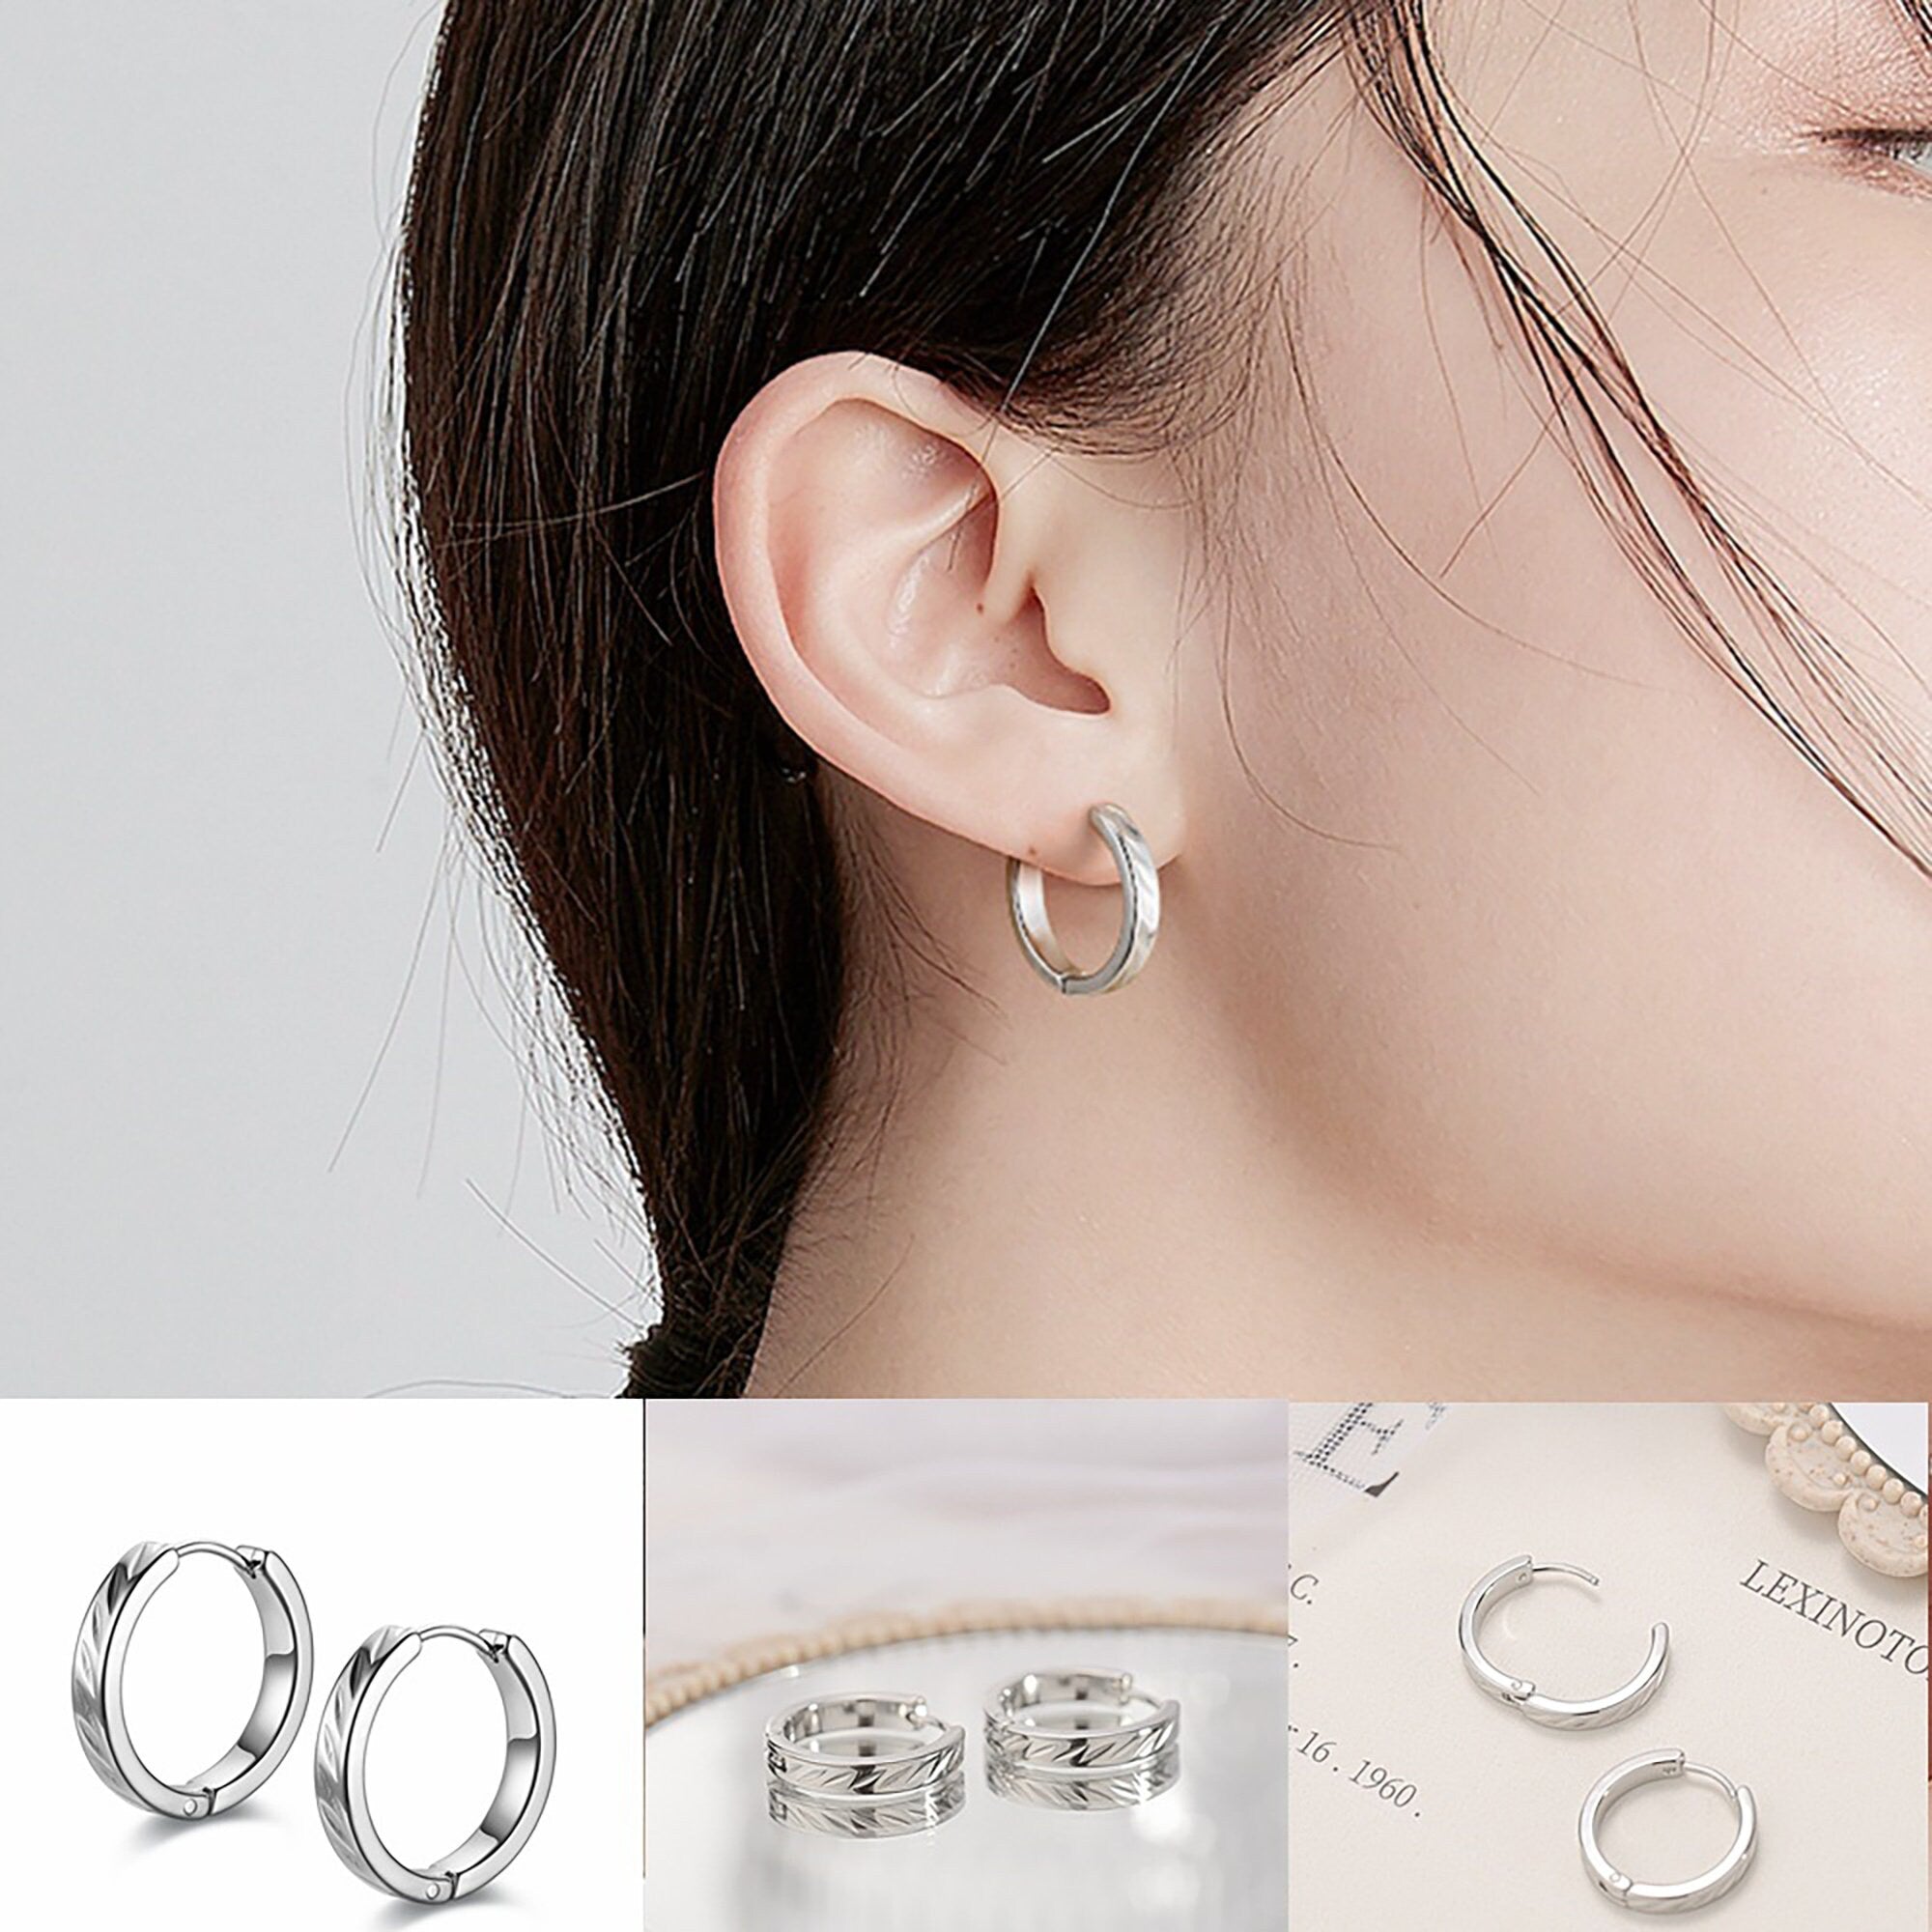 Limerencia Hypoallergenic G23 Pure Titanium Small Open C Hoop Earrings,  Lightweight Cubic Zirconia/Opal Cuff Huggie Earrings for Women Girls Teen  Sensitive Ears : Amazon.co.uk: Fashion